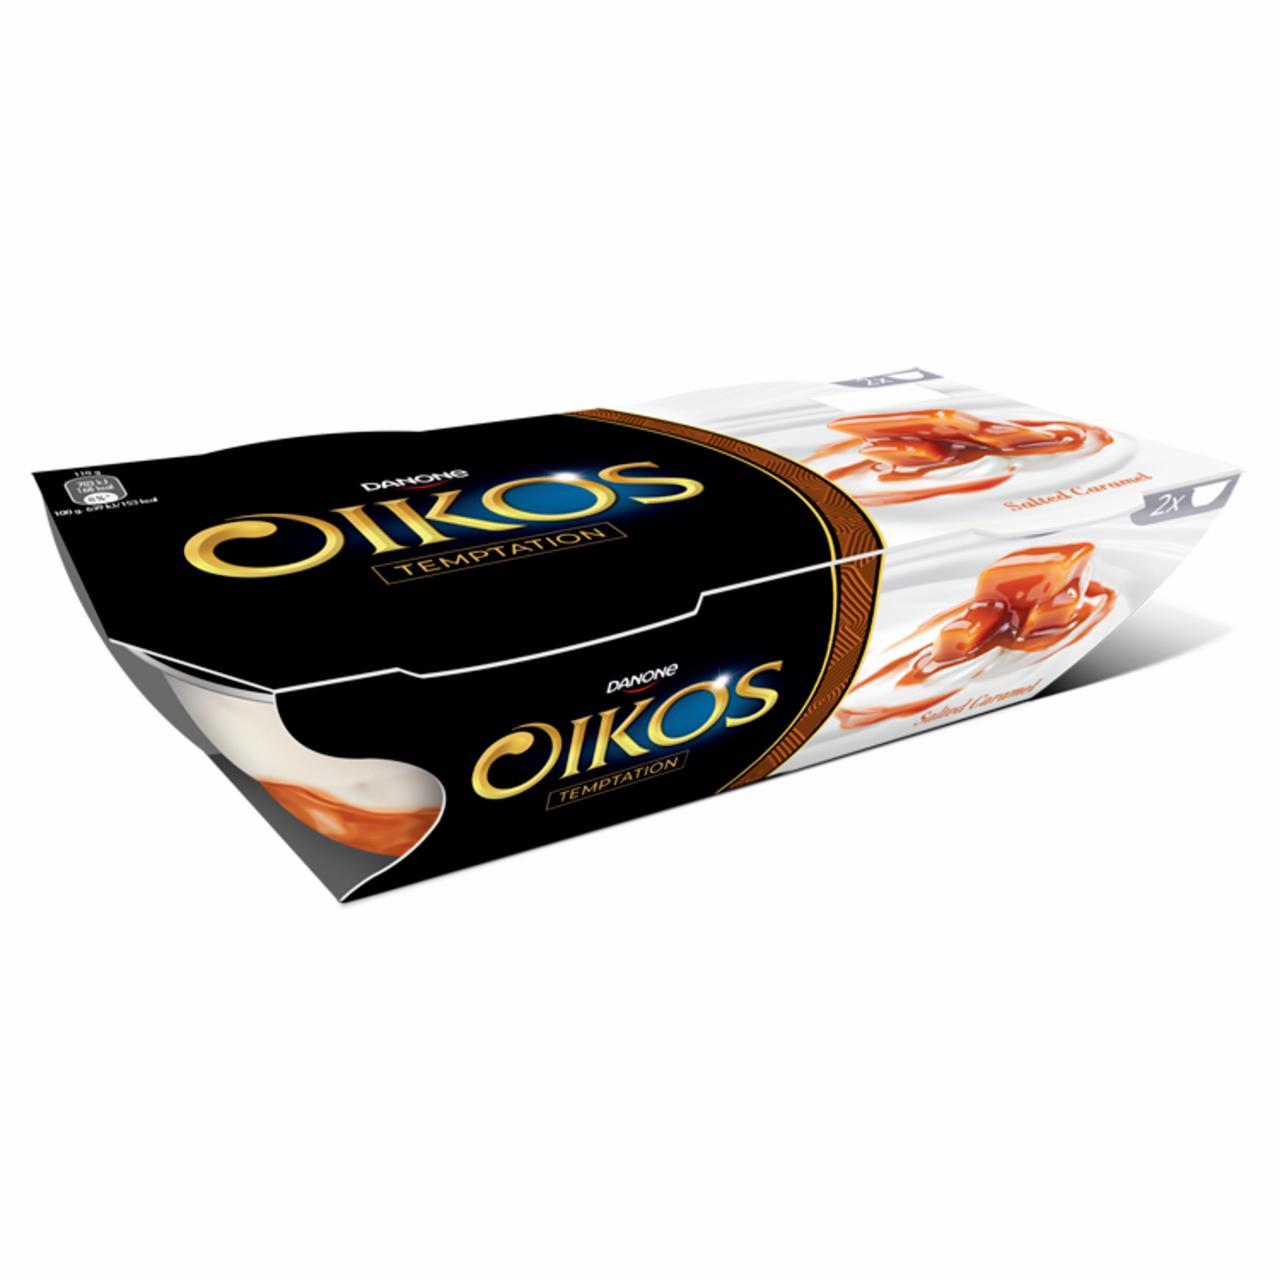 Képek - Danone Oikos élőflórás görög krémjoghurt karamellöntettel 2 x 110 g